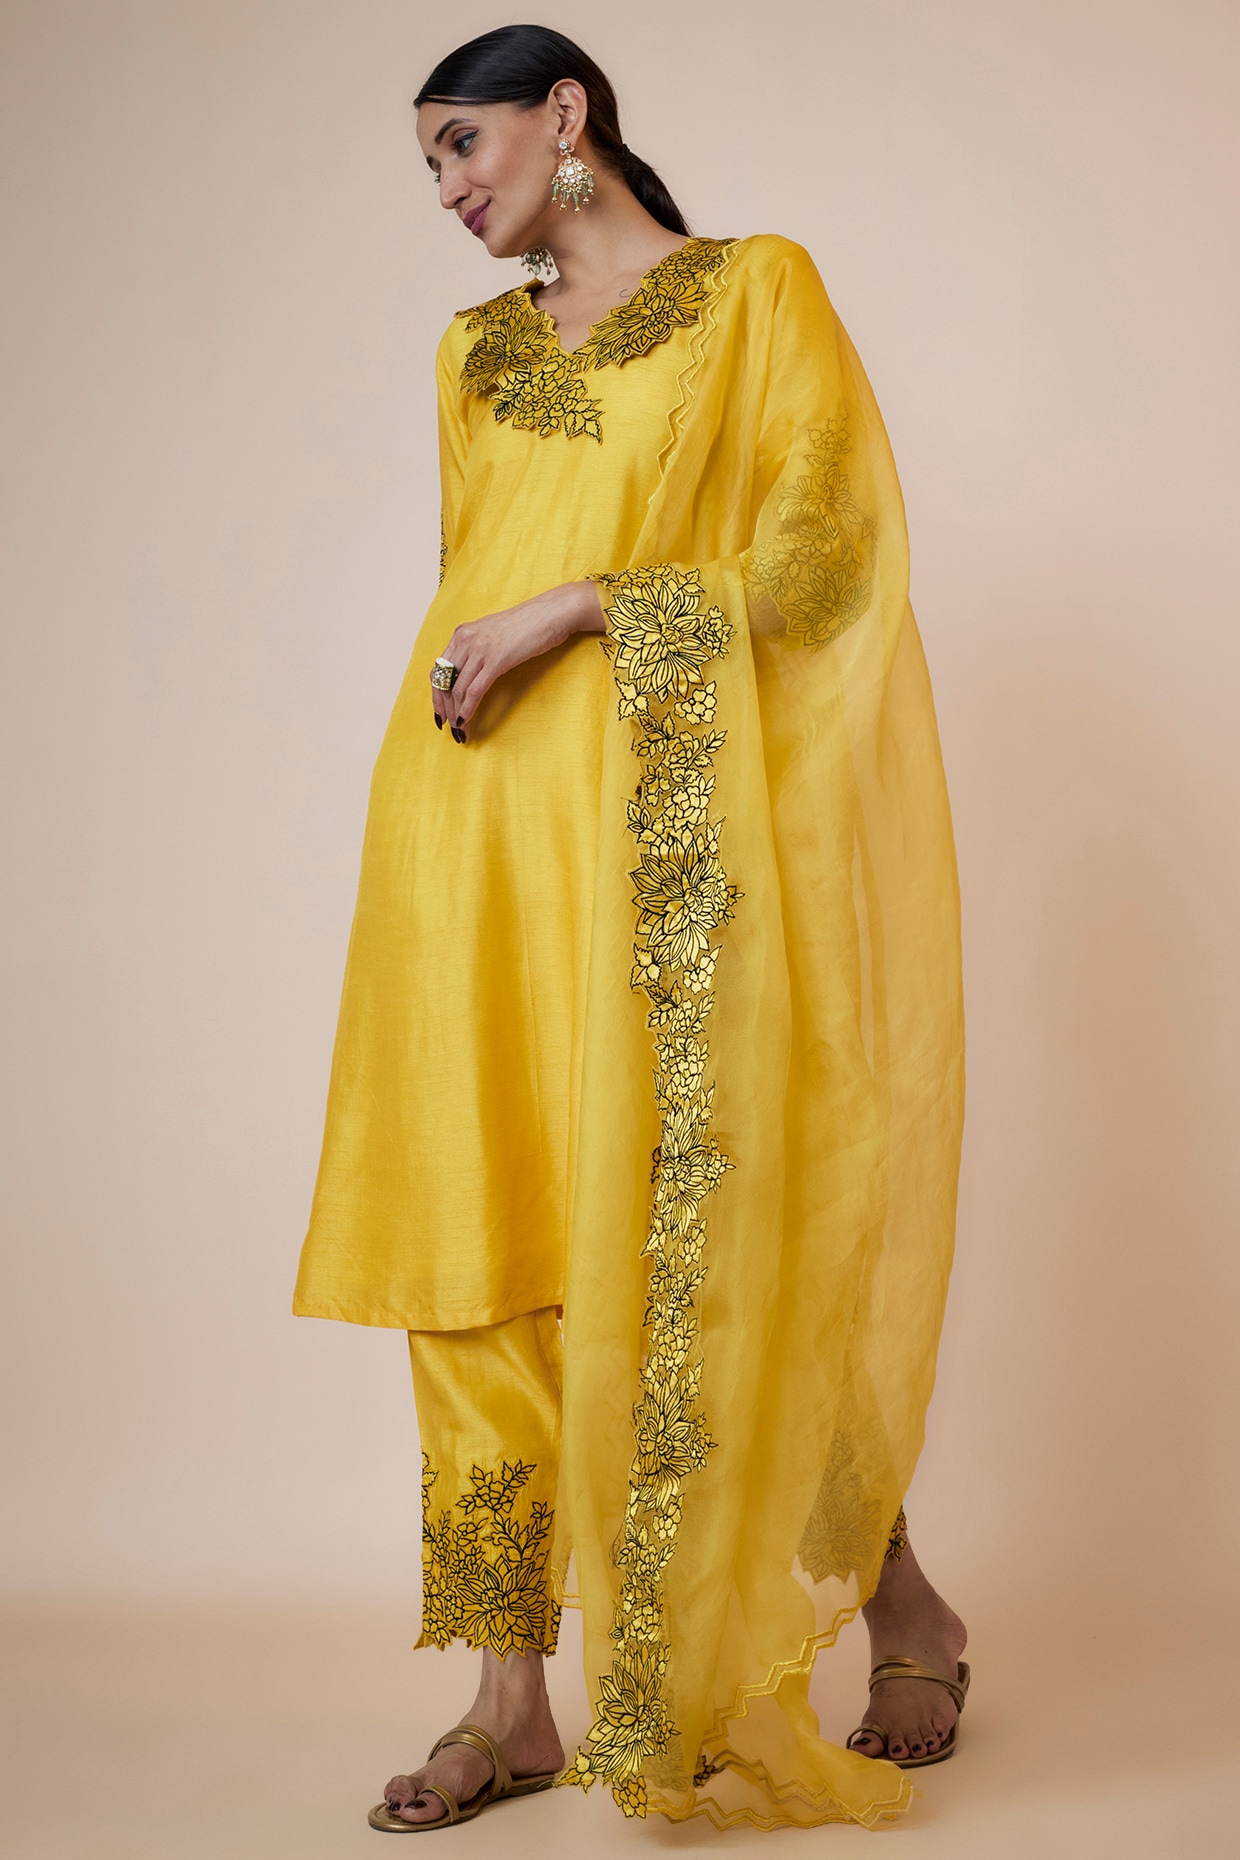 Rajputi Dress Photos, Download The BEST Free Rajputi Dress Stock Photos &  HD Images